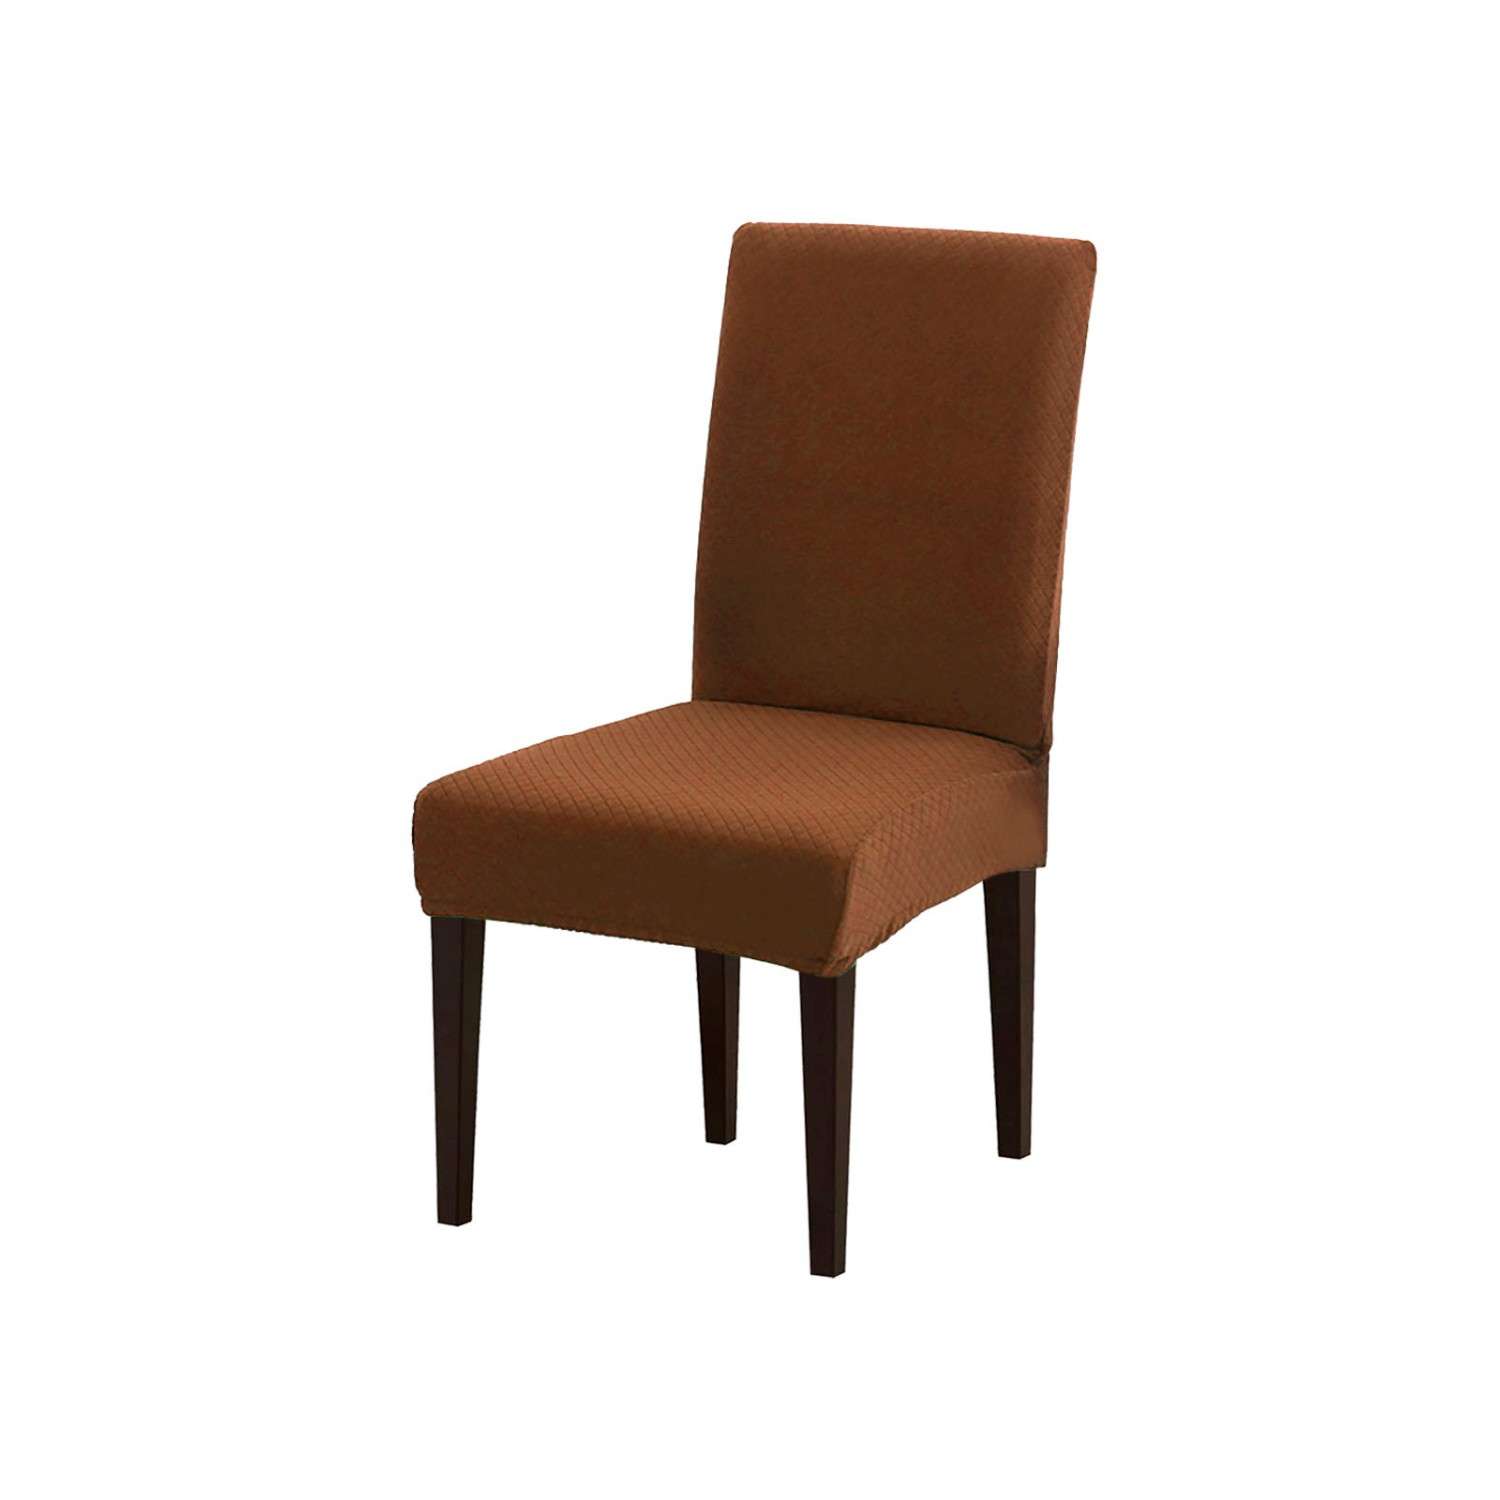 Чехол на стул LuxAlto Коллекция Quilting коричневый - фото 1